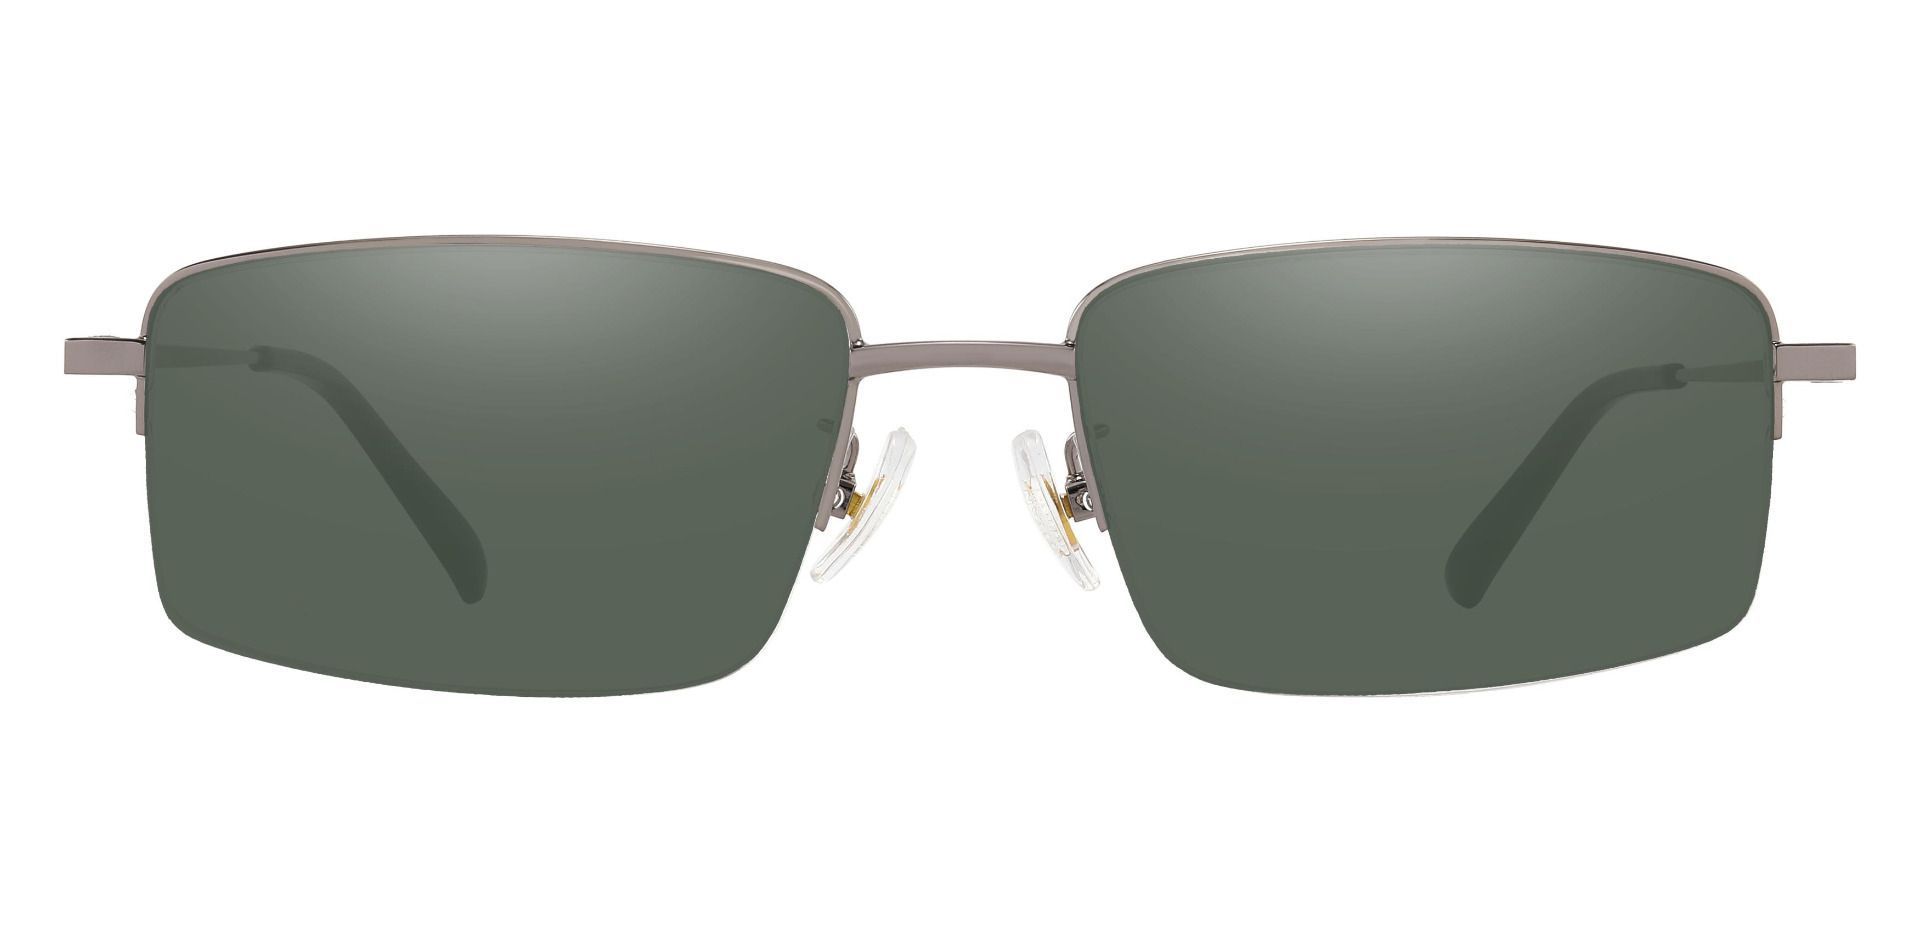 Wayne Rectangle Prescription Sunglasses - Gray Frame With Green Lenses